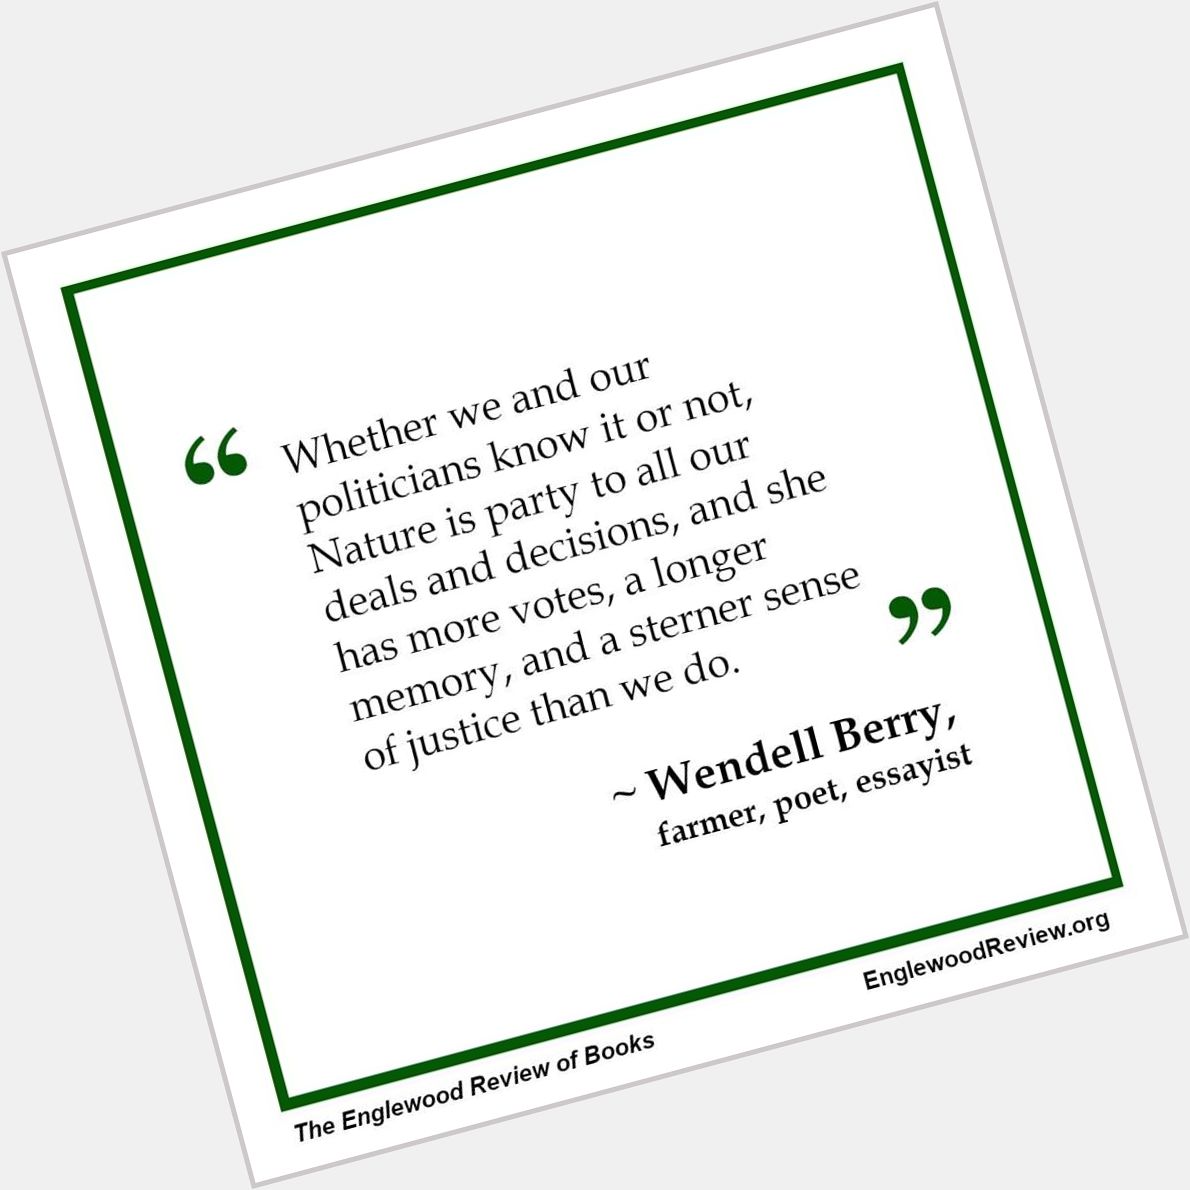 Happy Birthday, Wendell Berry!!! 